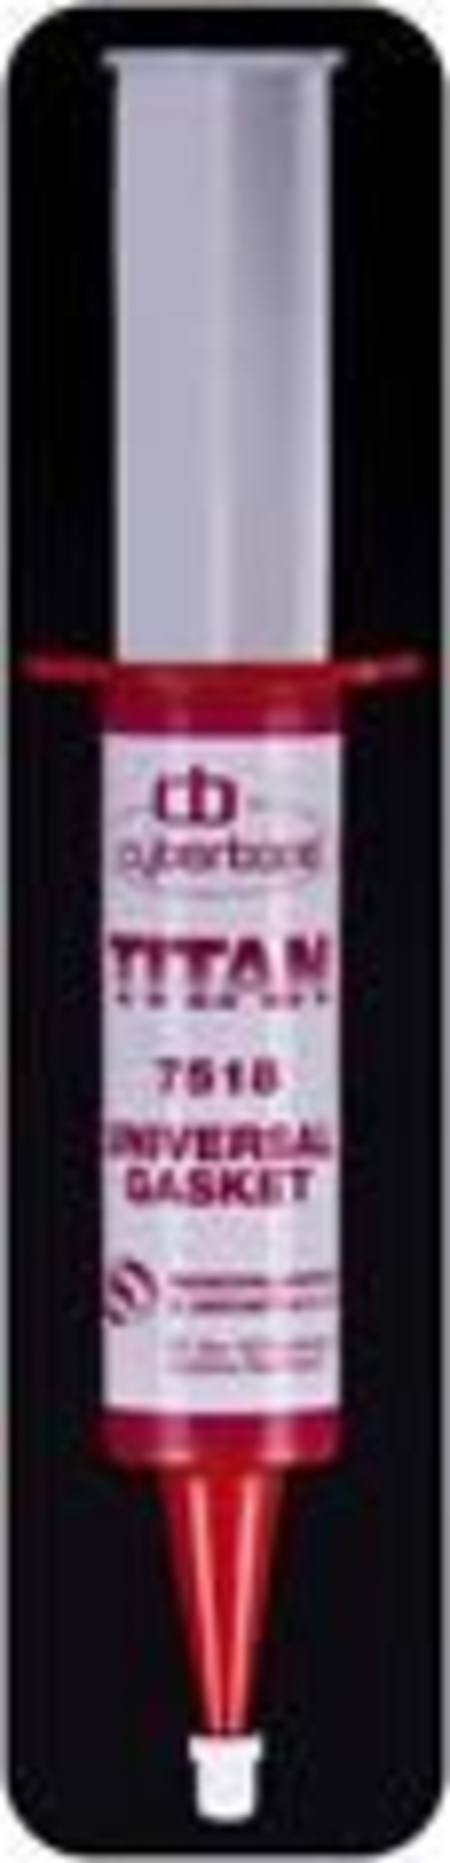 TITAN 7518 UNIVERSAL GASKET 25ml SYRINGE